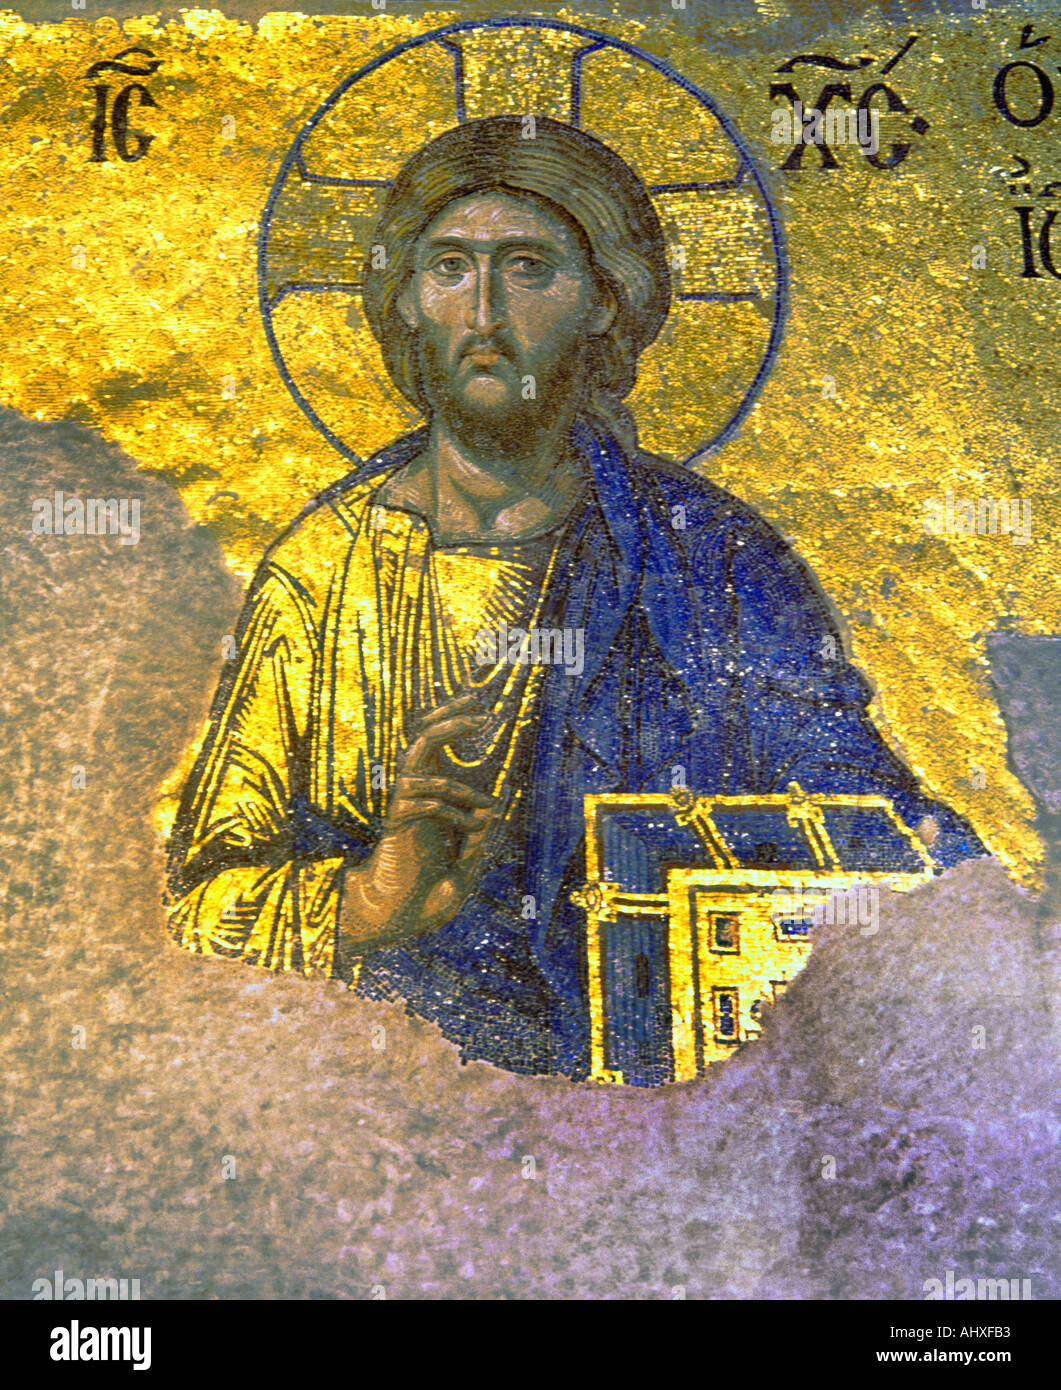 Estambul TURQUÍA Aya Sofya Haghia Sophia Mural bizantino de Cristo Foto de stock